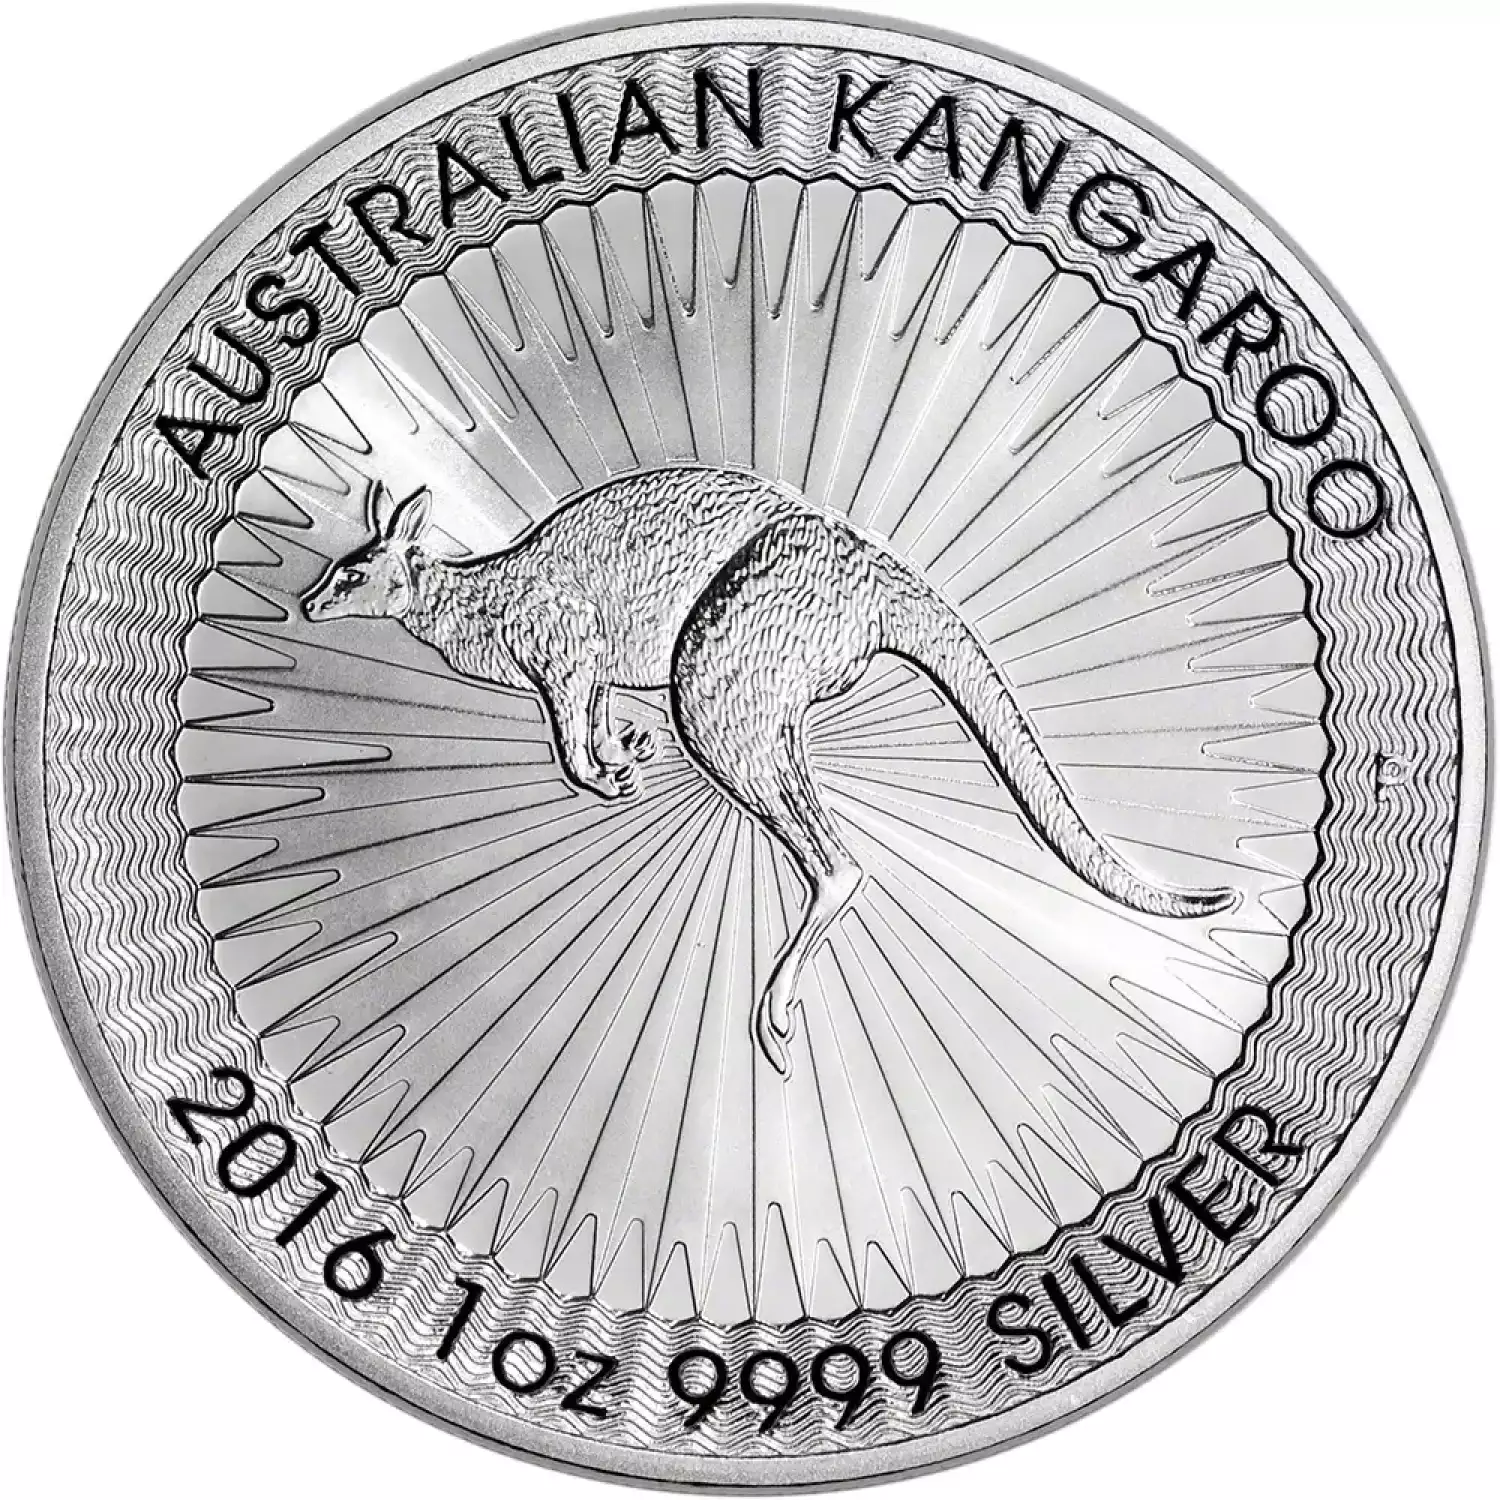 Any Year 1oz Silver Kangaroo - Royal Australian Mint (2)